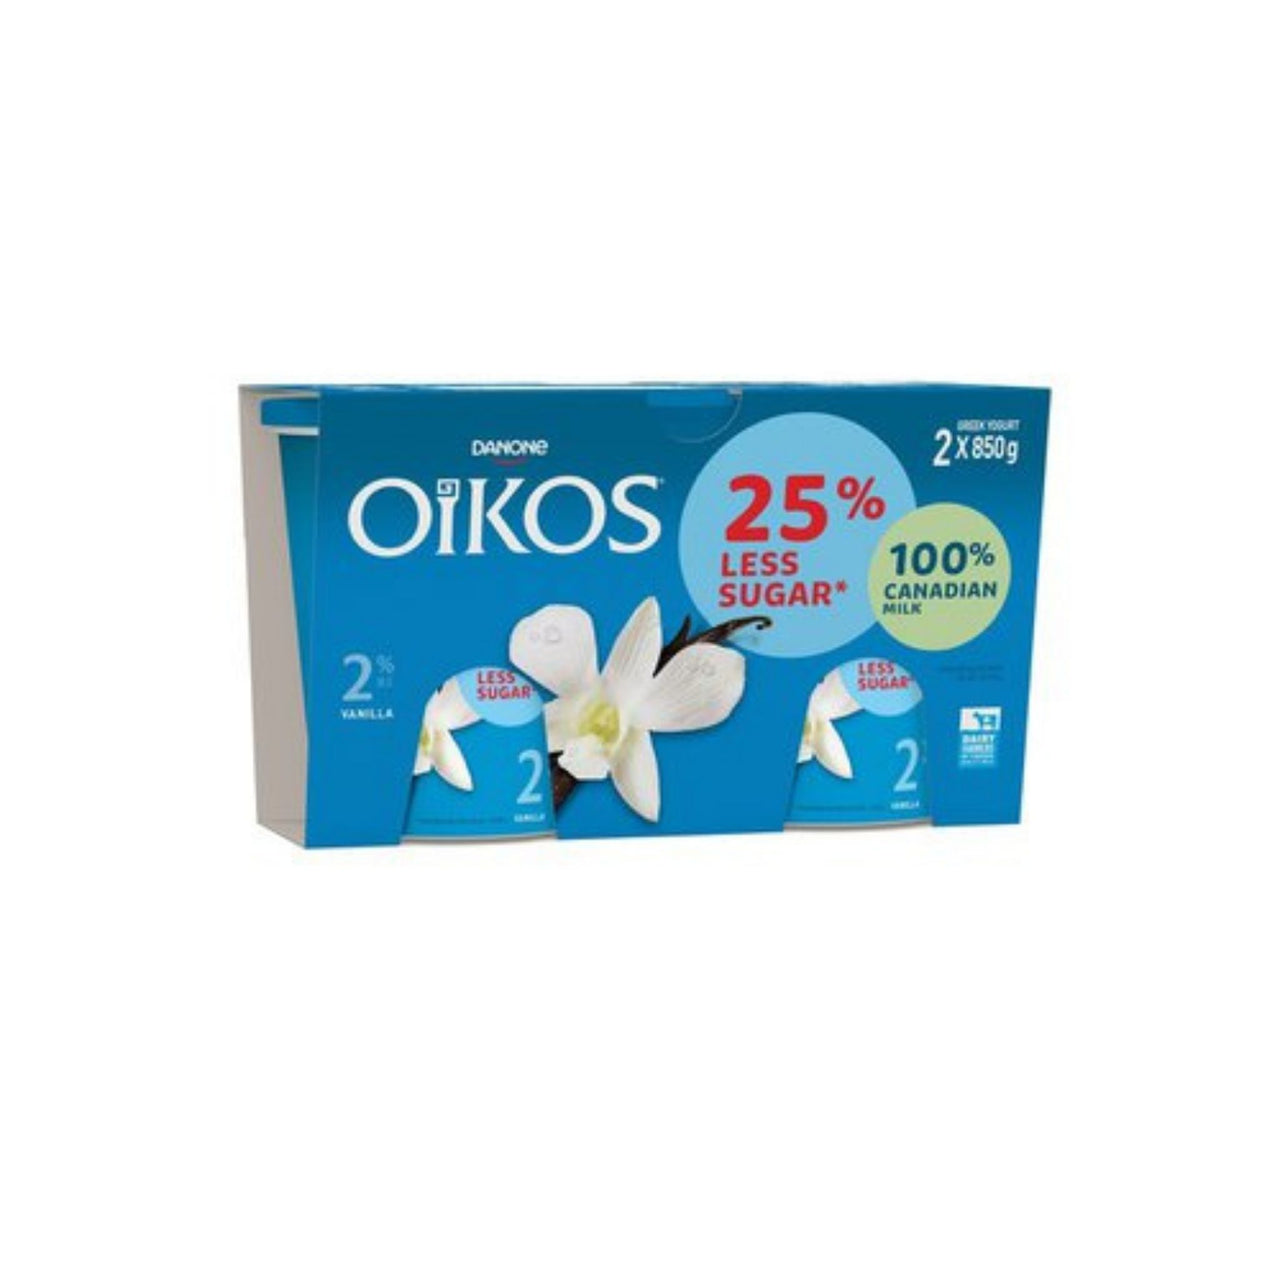 Image of Oikos 2% Greek vanilla yogurt 25% less sugar 2×850g